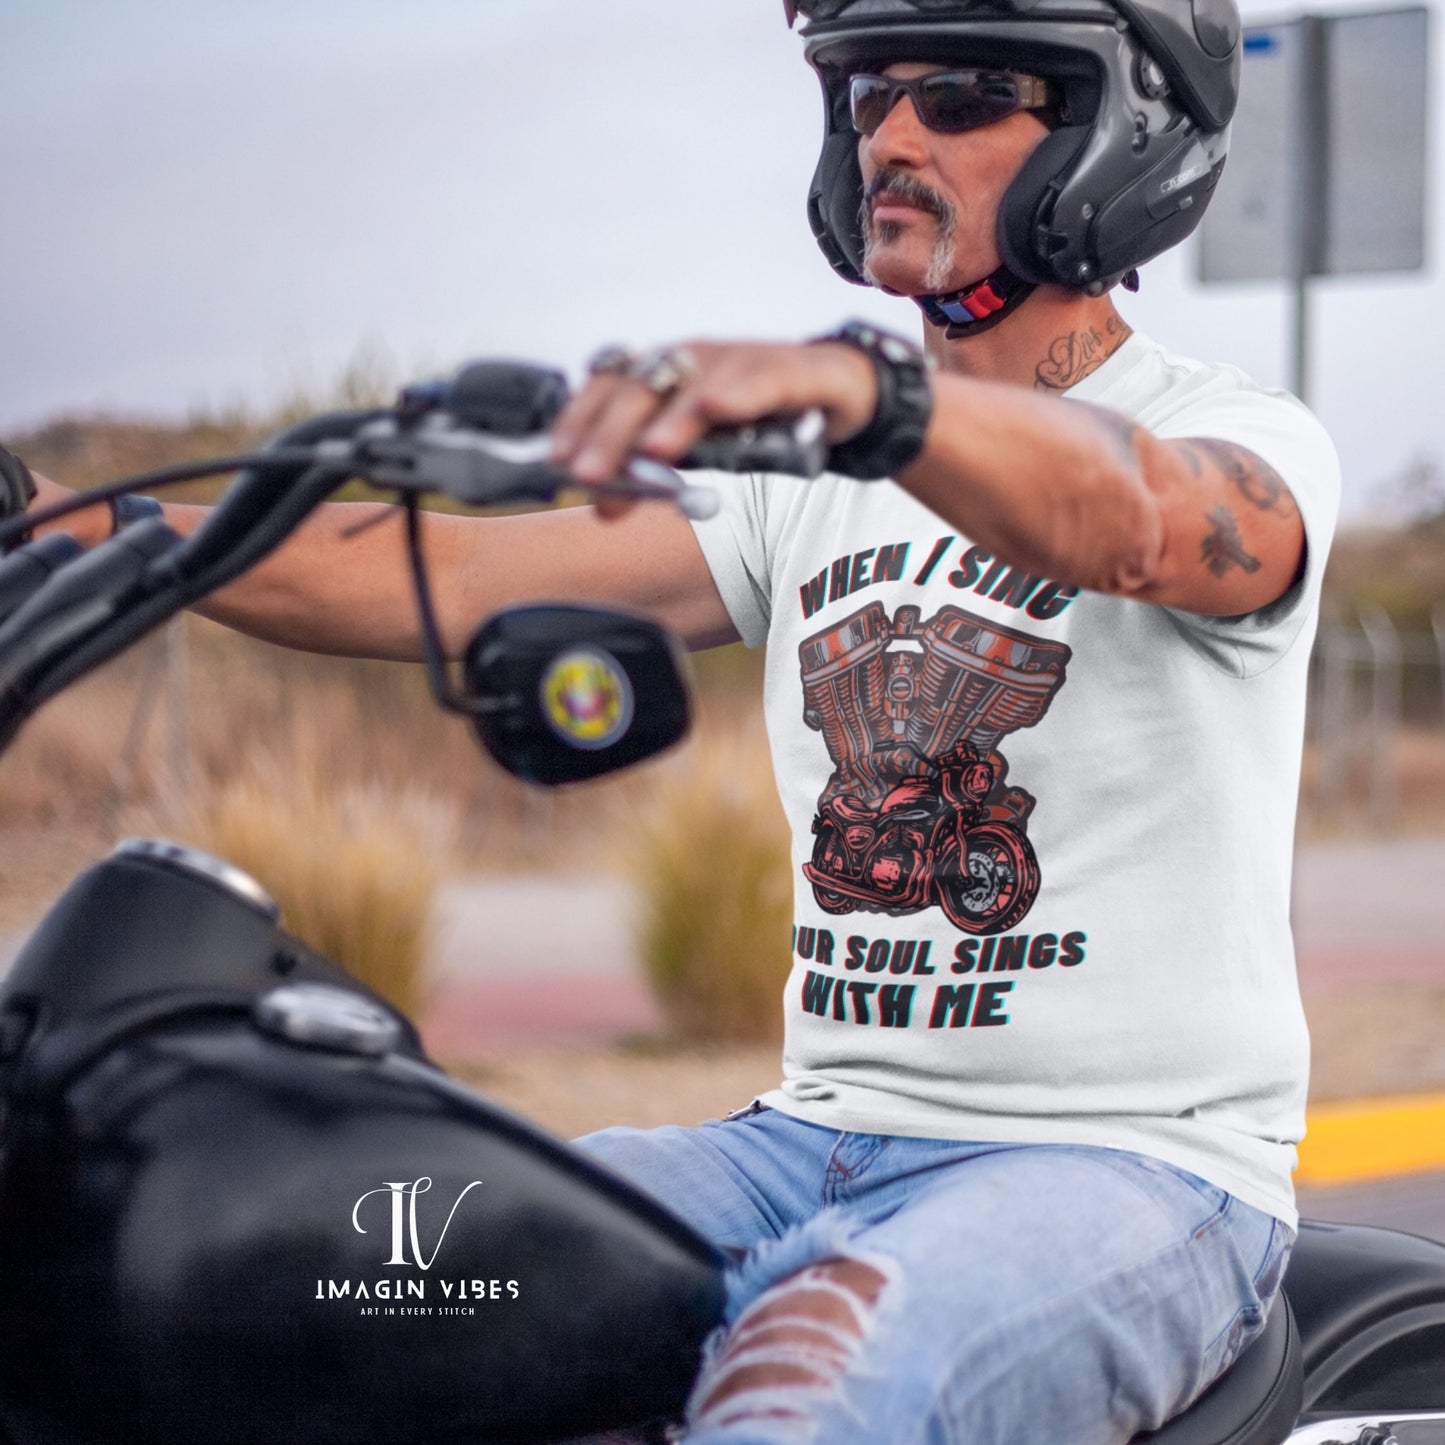 Motorcycle Unisex T-shirt - When I Sing, Your Soul Sings With Me - Motorcycle Riding Shirt, Biker Tee, Cool Biker Shirt USA T-Shirt   